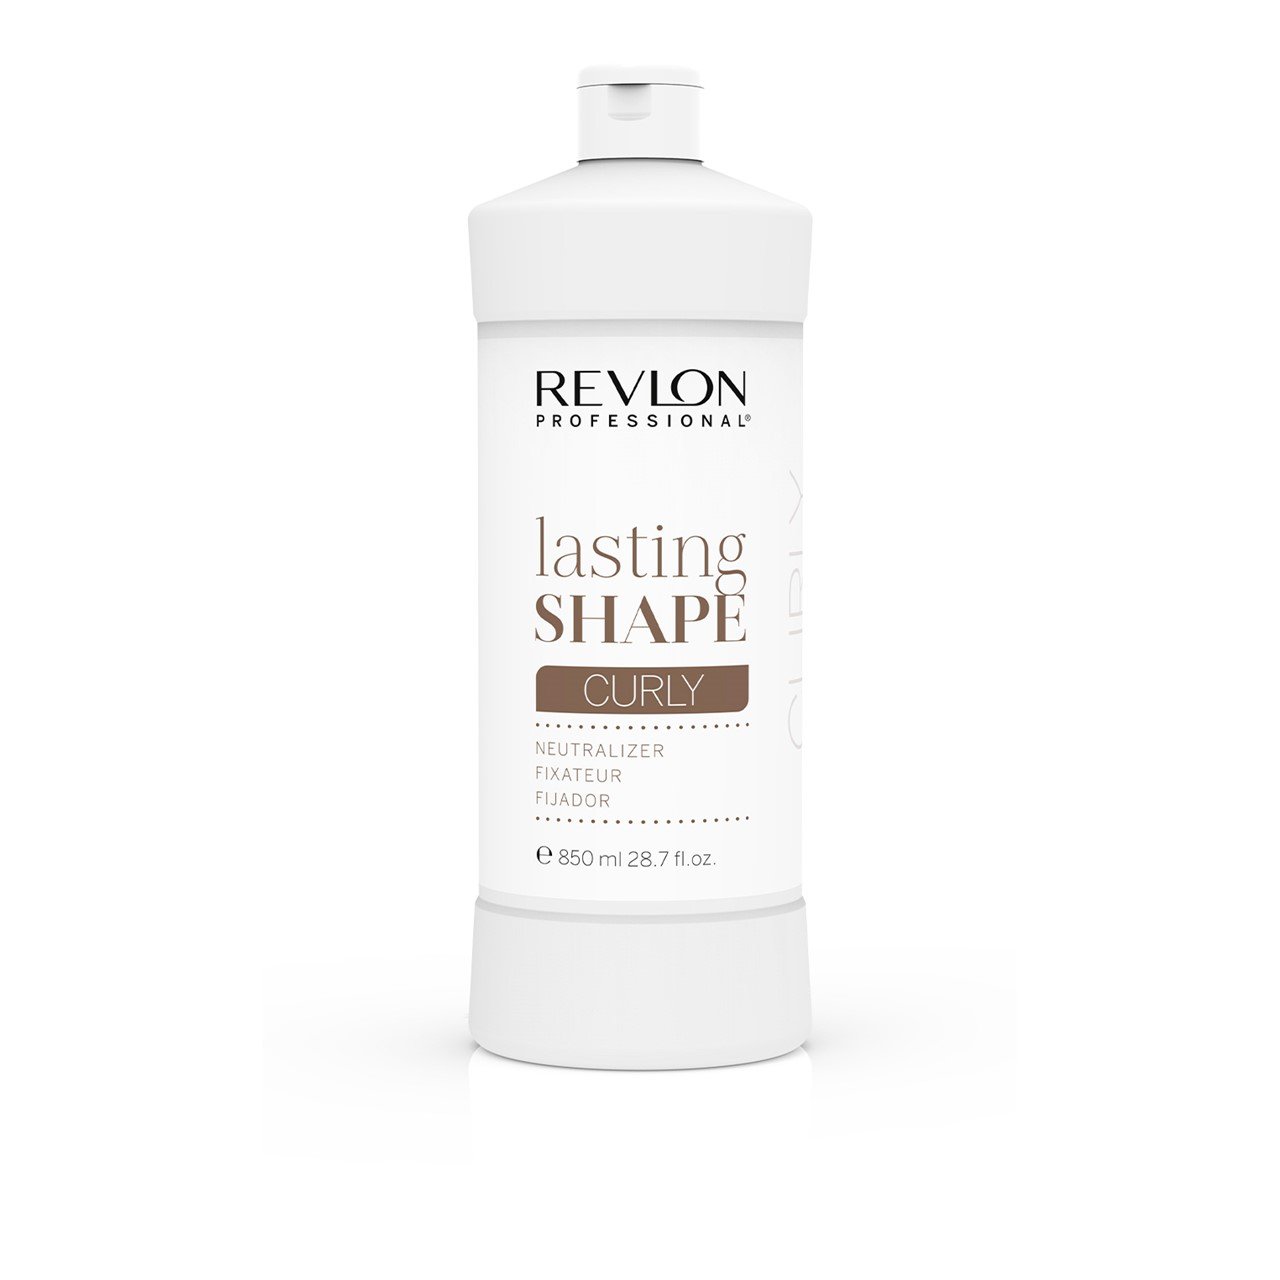 Revlon Professional Lasting Shape Curly Neutralizer 850ml (28.74fl oz)